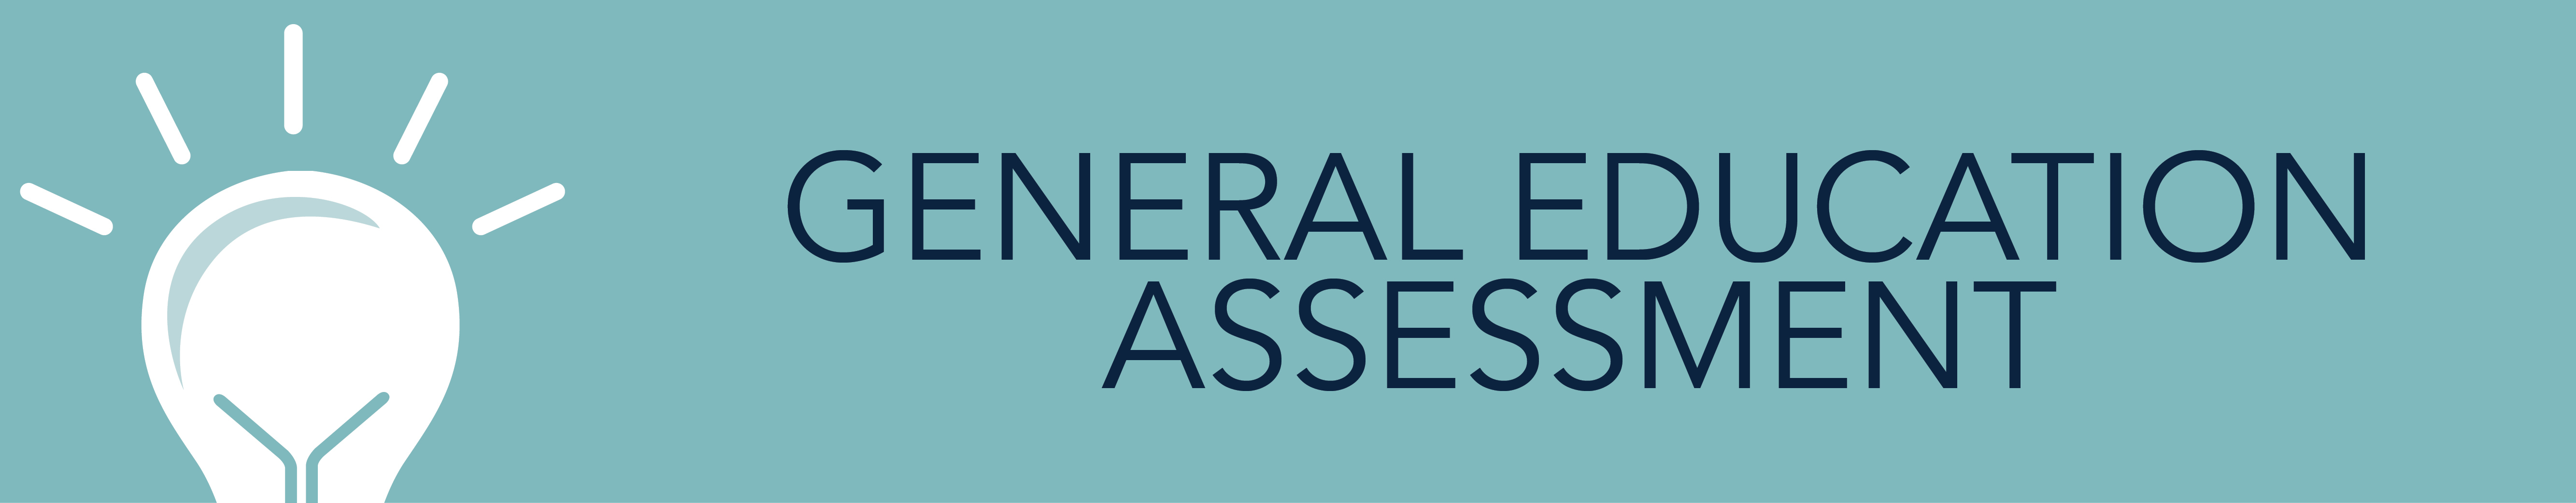 General Education Assessment Header